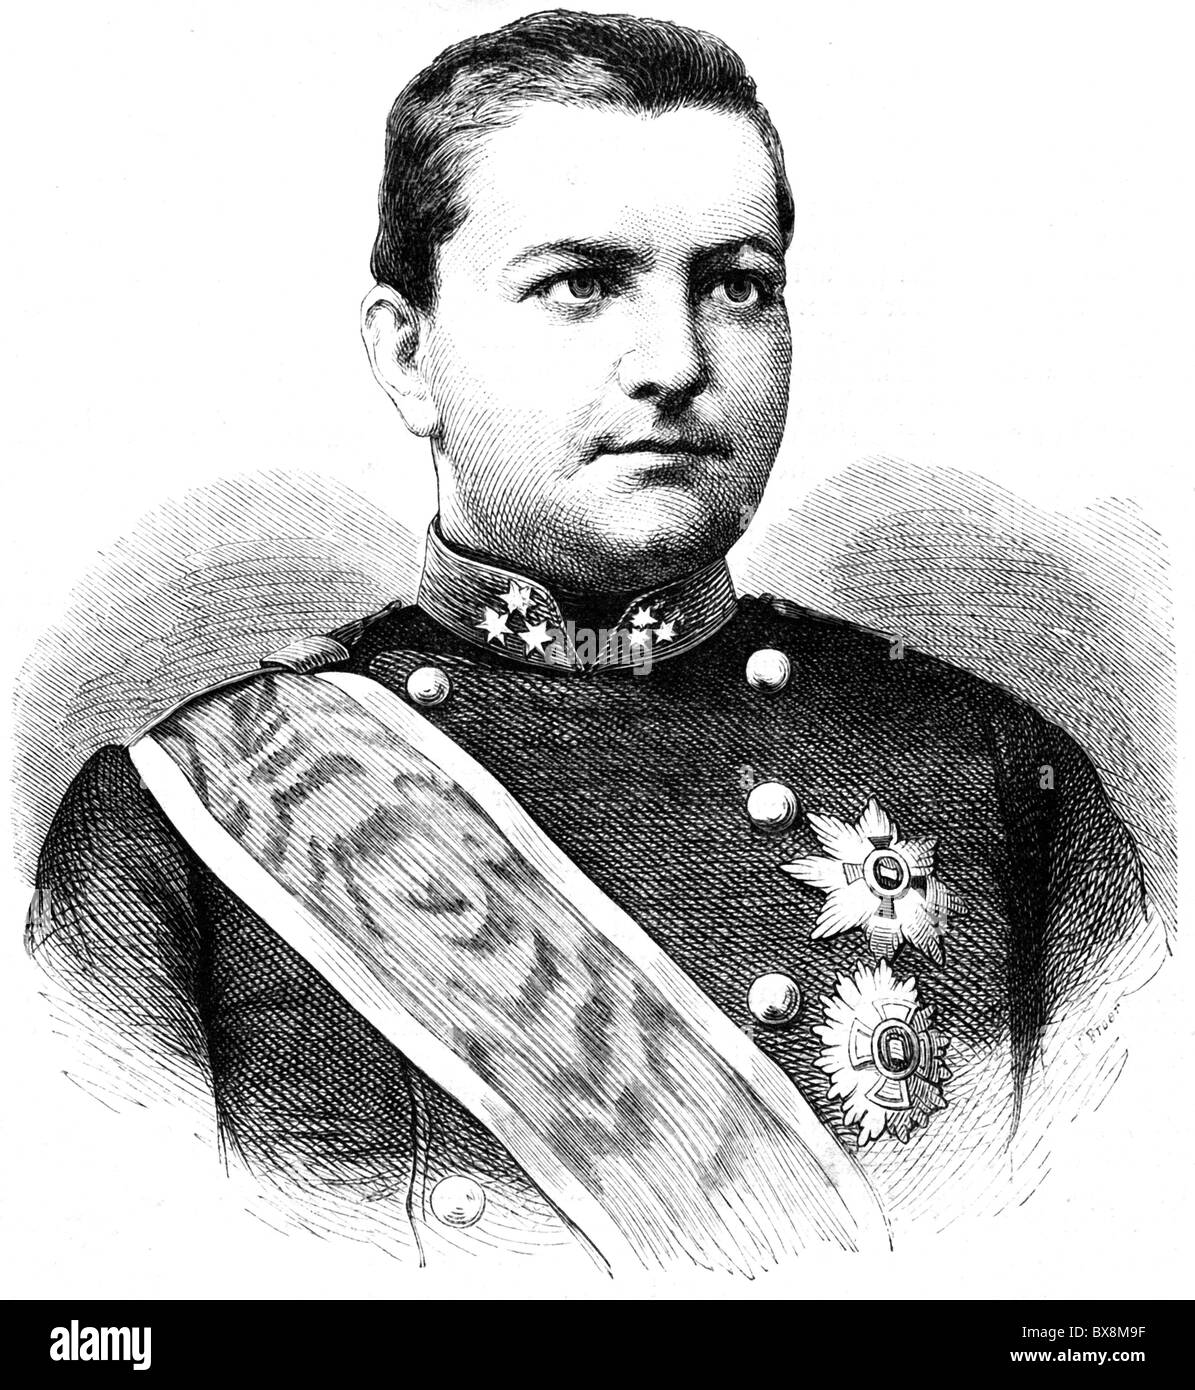 Milan I, 22.8.1854 - 11.2.1901, King of Serbia 1882 - 1889, portrait, wood engraving, circa 1870s, Stock Photo